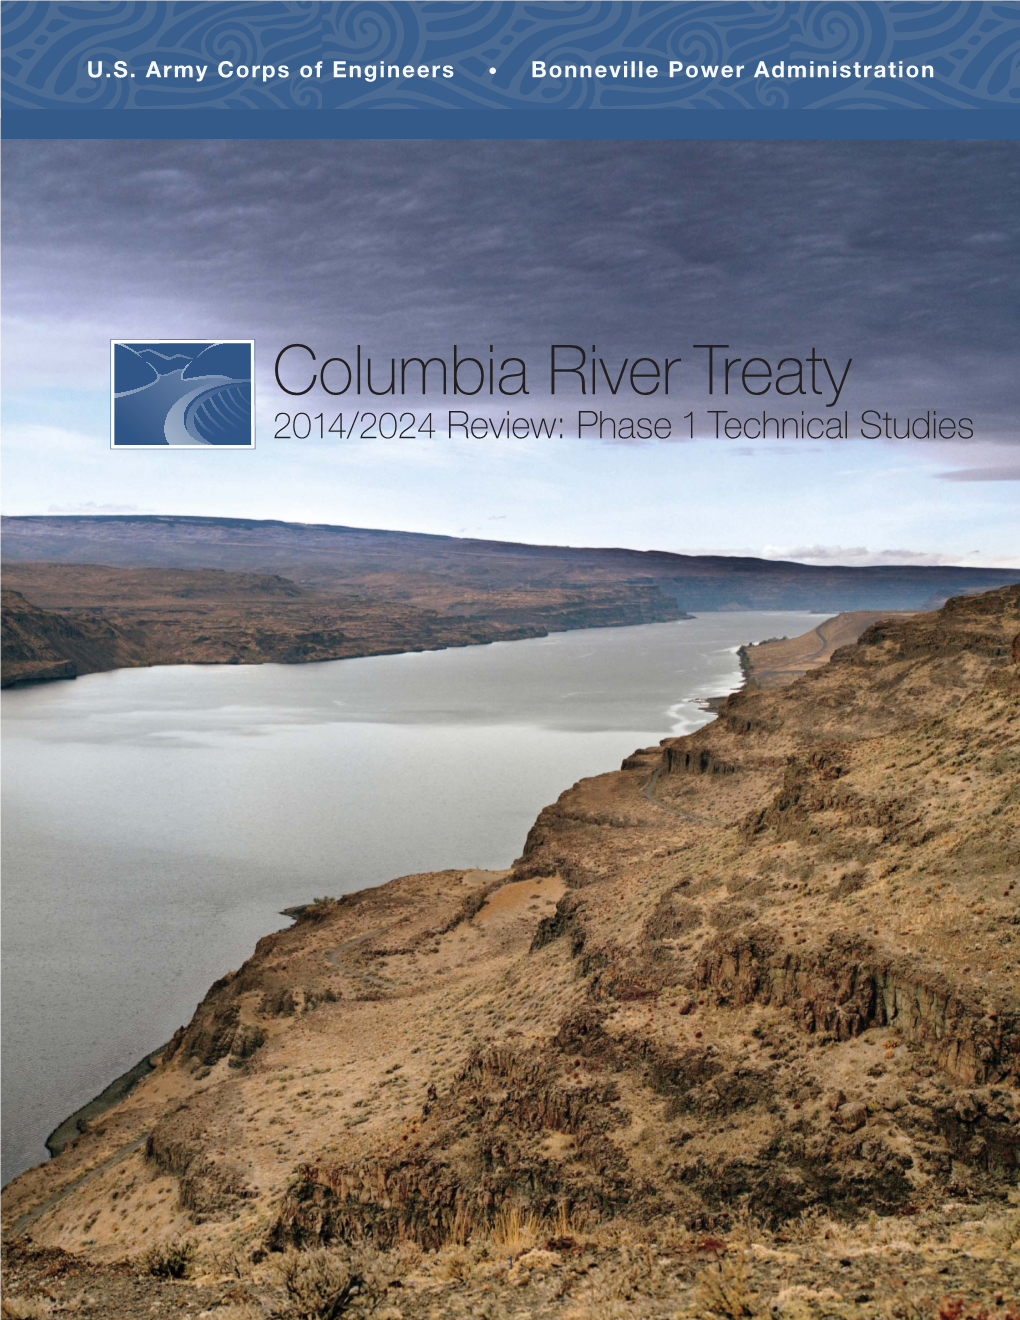 Columbia River Treaty Review #2